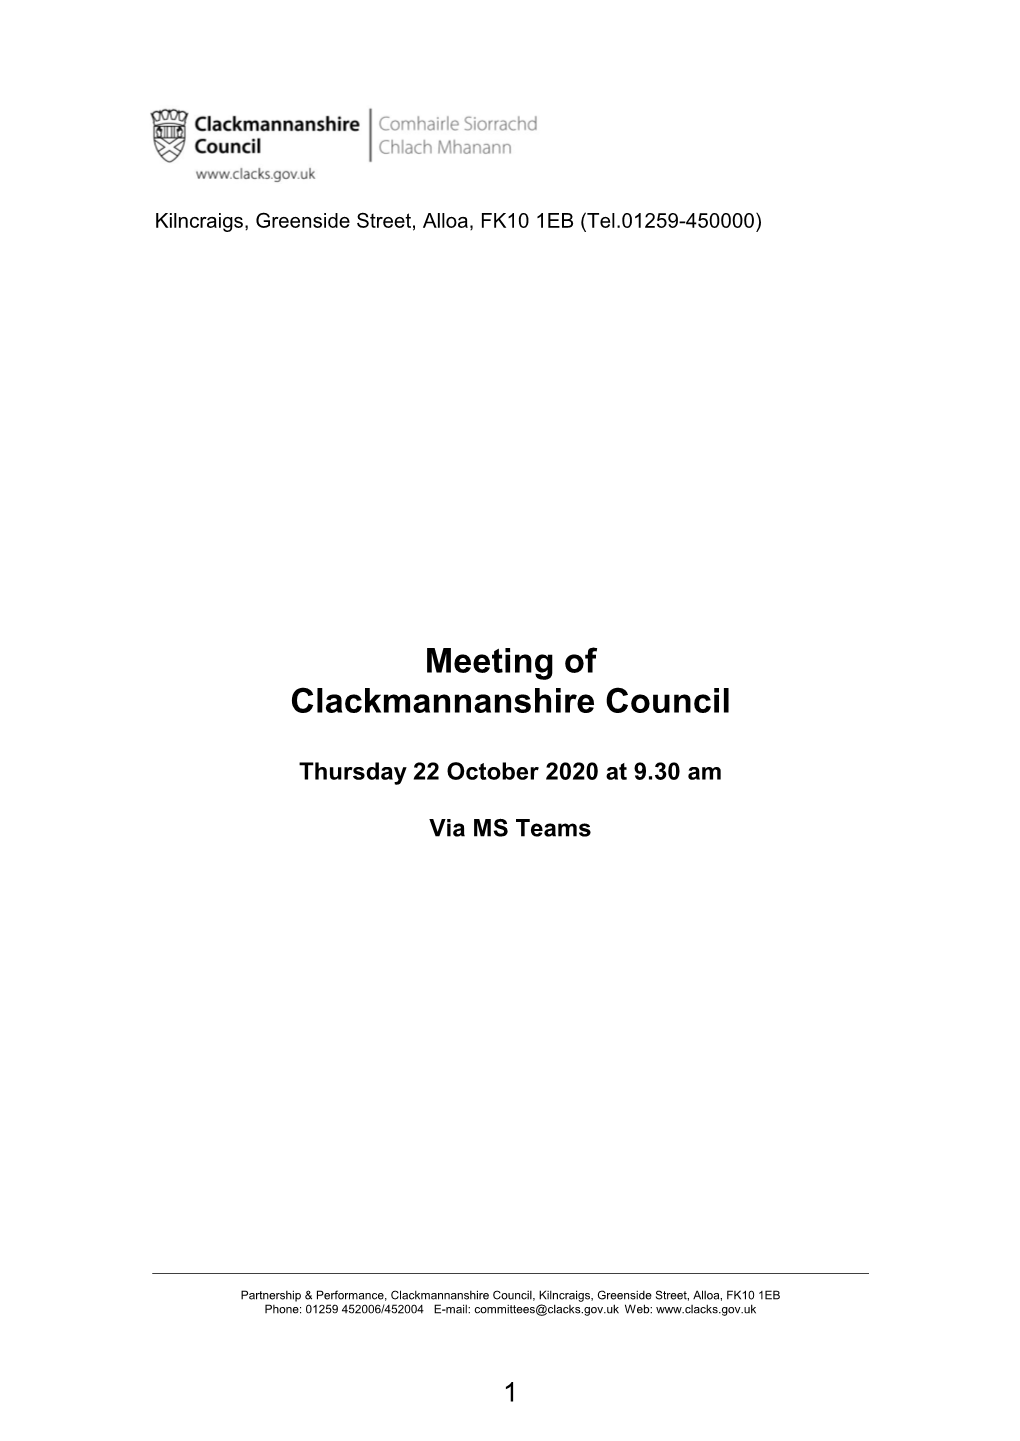 Meeting of Clackmannanshire Council